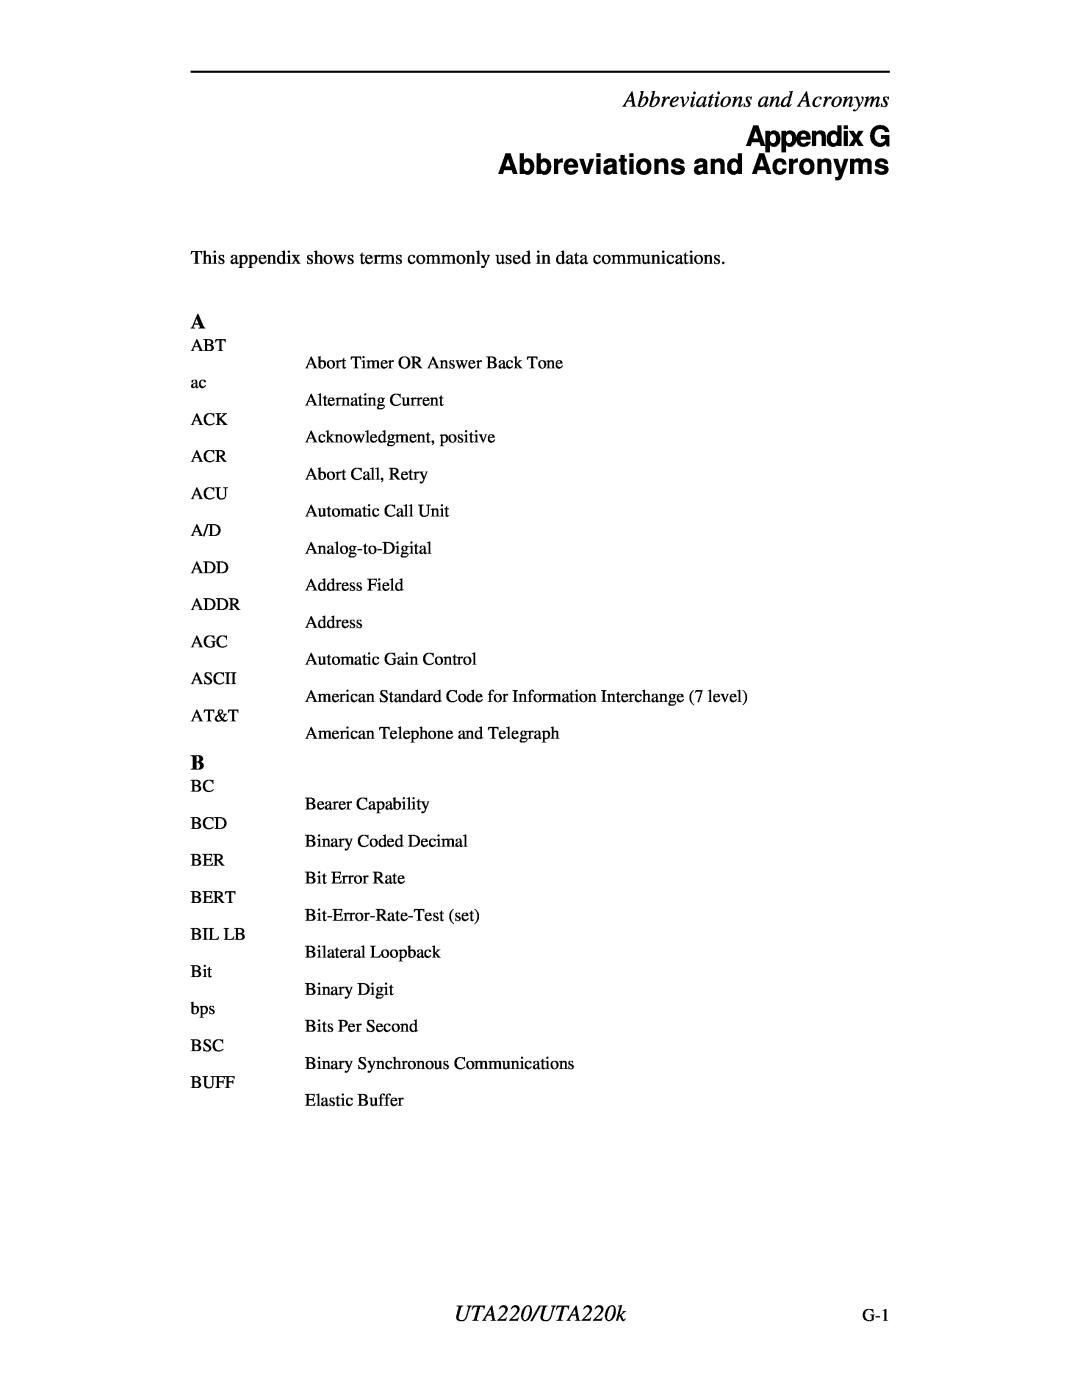 Northern UTA220/UTA220k manual Appendix G Abbreviations and Acronyms 